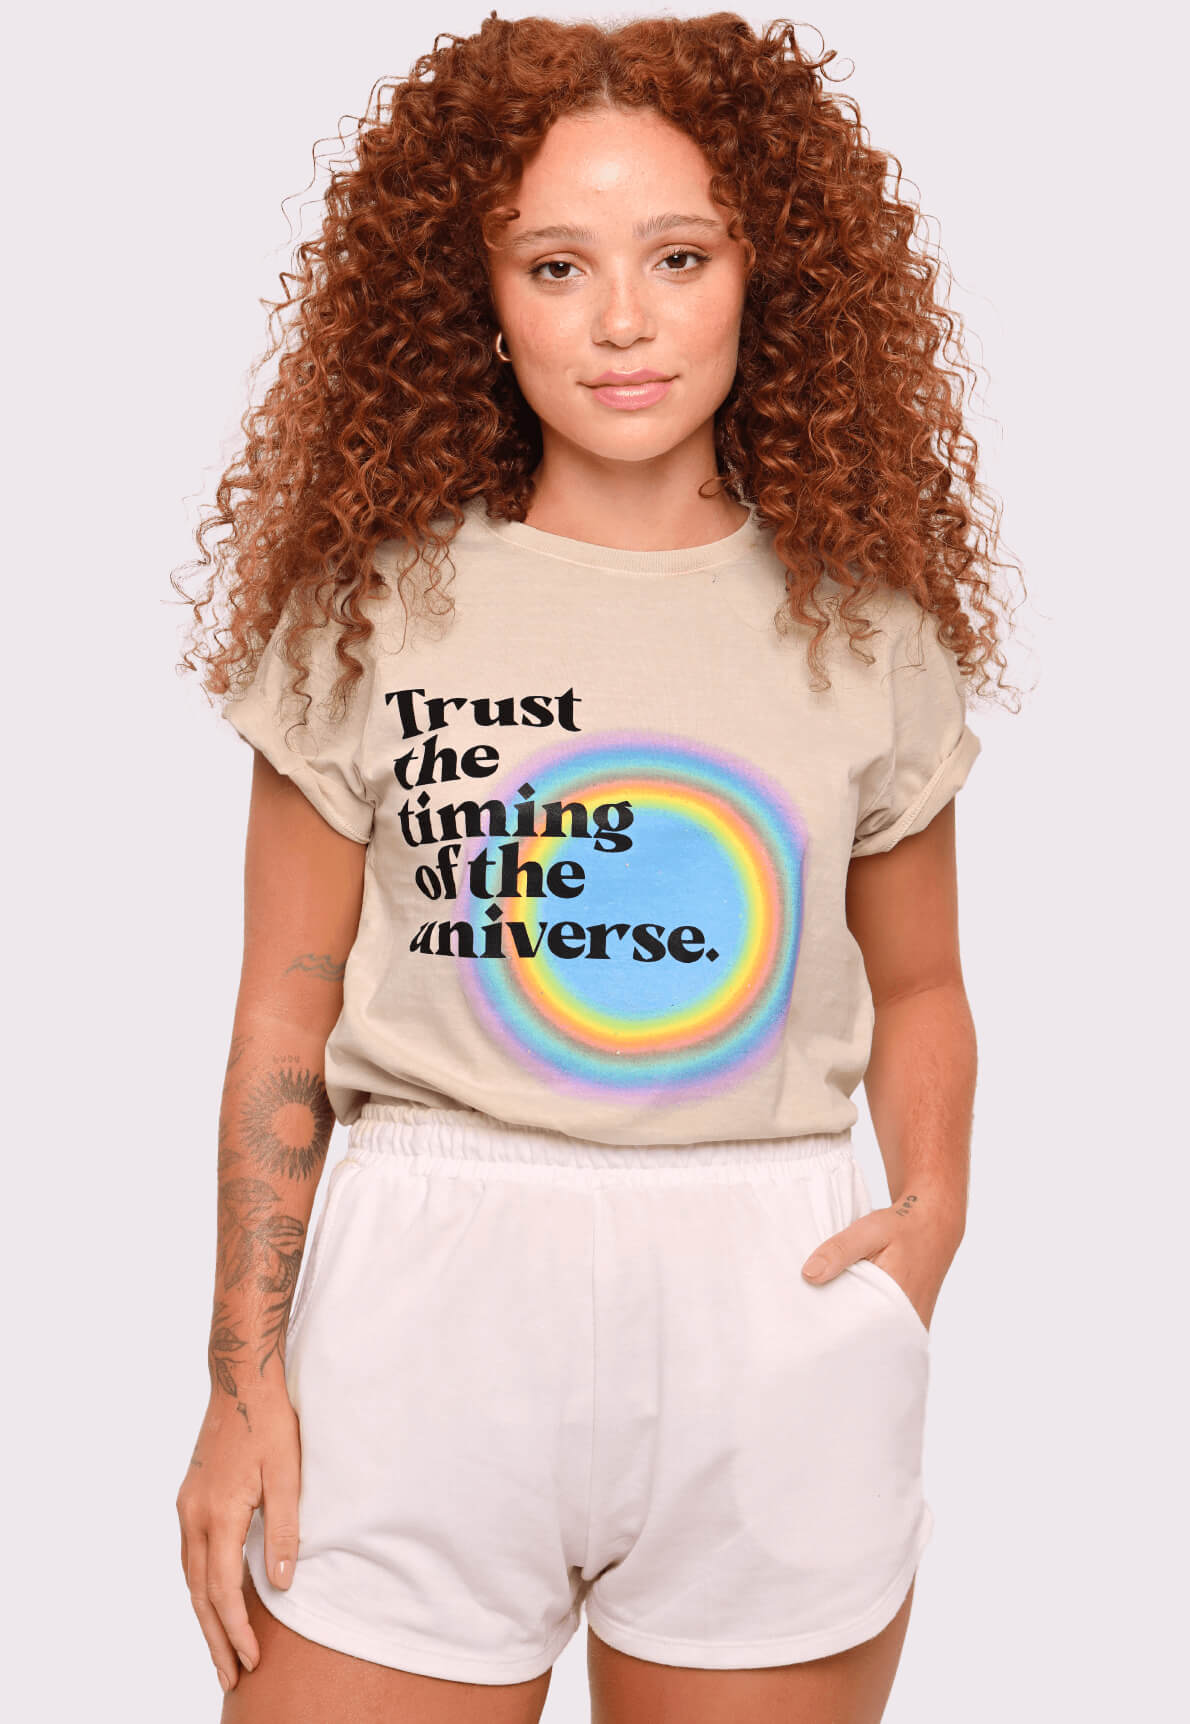 42524-t-shirt-trust-the-timing-of-the-universe-mundo-lolita-02